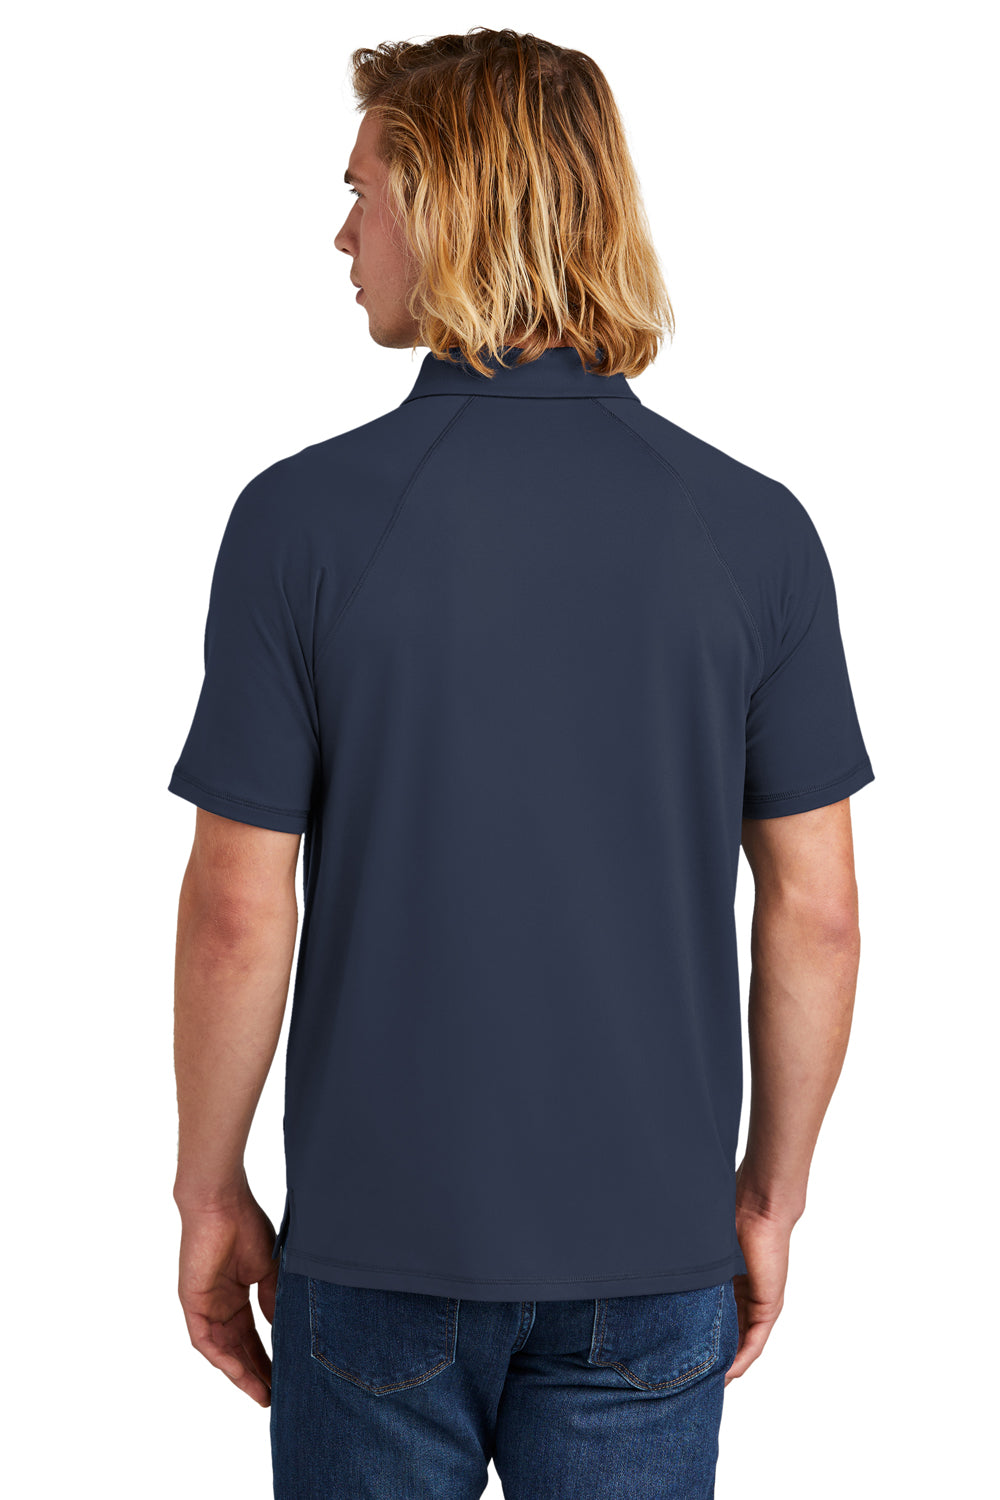 New Era Mens Power Short Sleeve Polo Shirt True Navy Blue Back